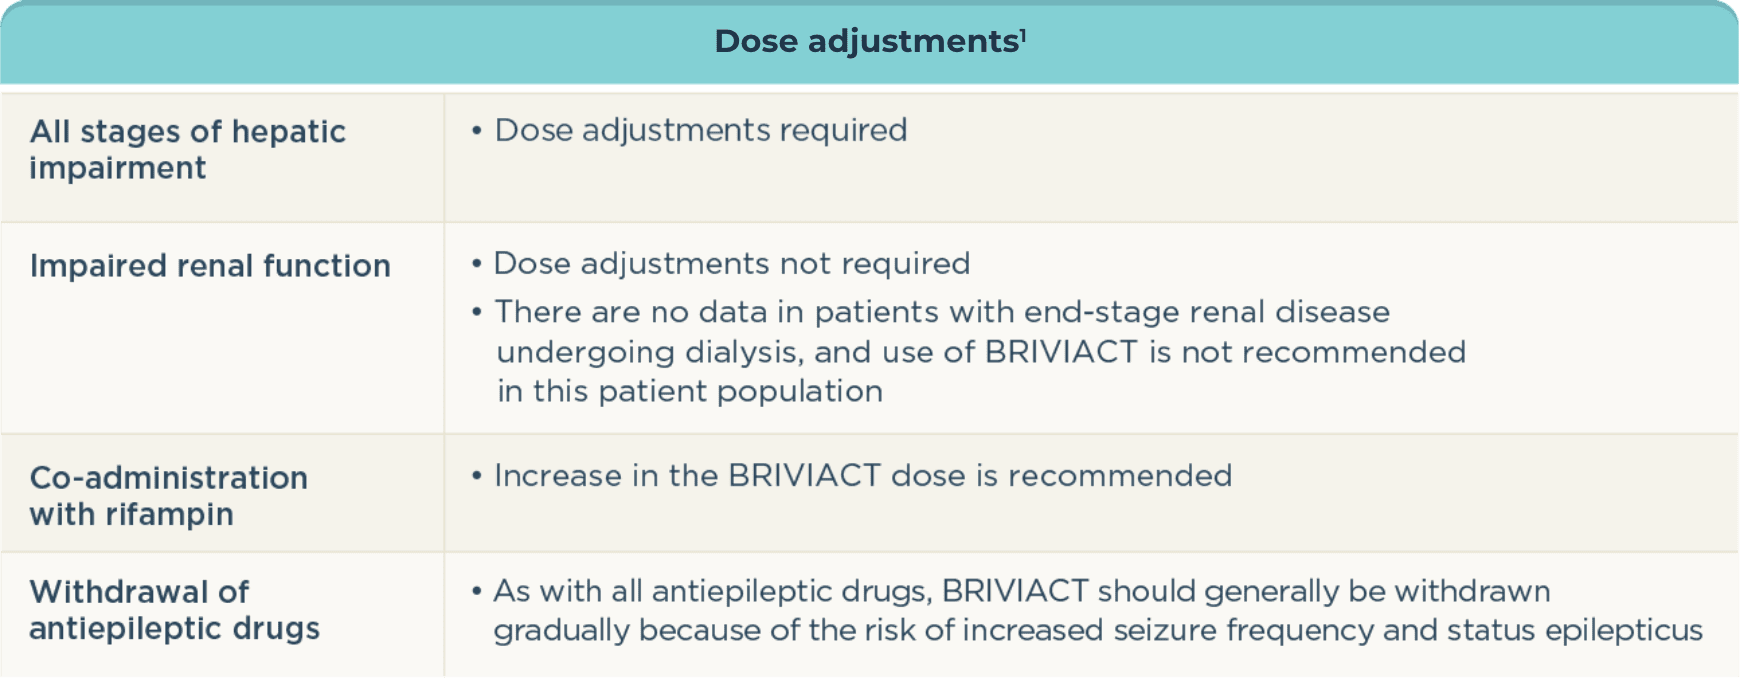 dose_adjustments